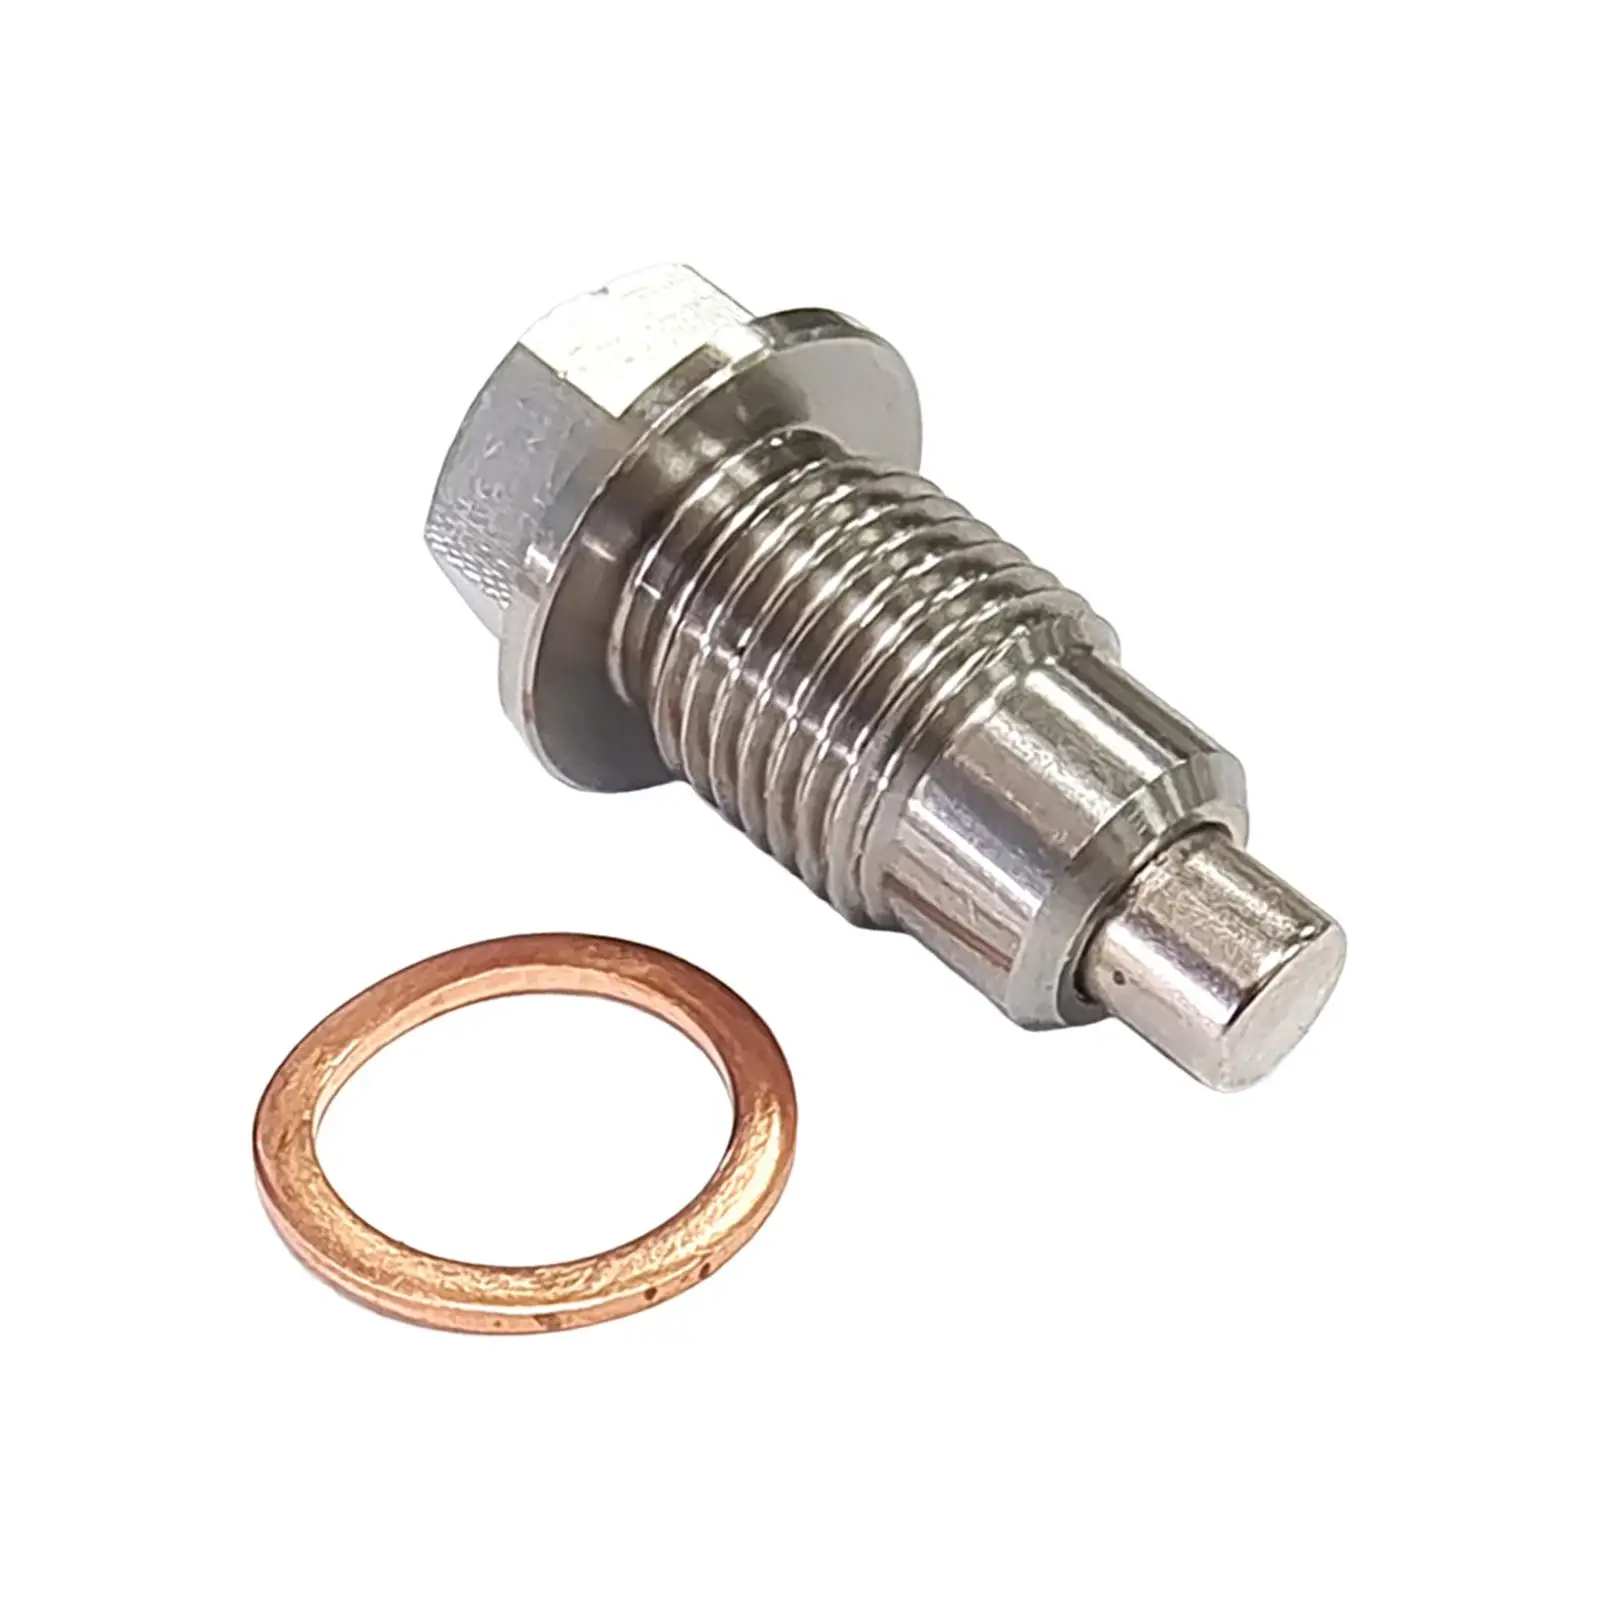 Oil Drain Plug M12x1.25 with Cooper Washer Heavy Duty Neodymium Magnet Bolt